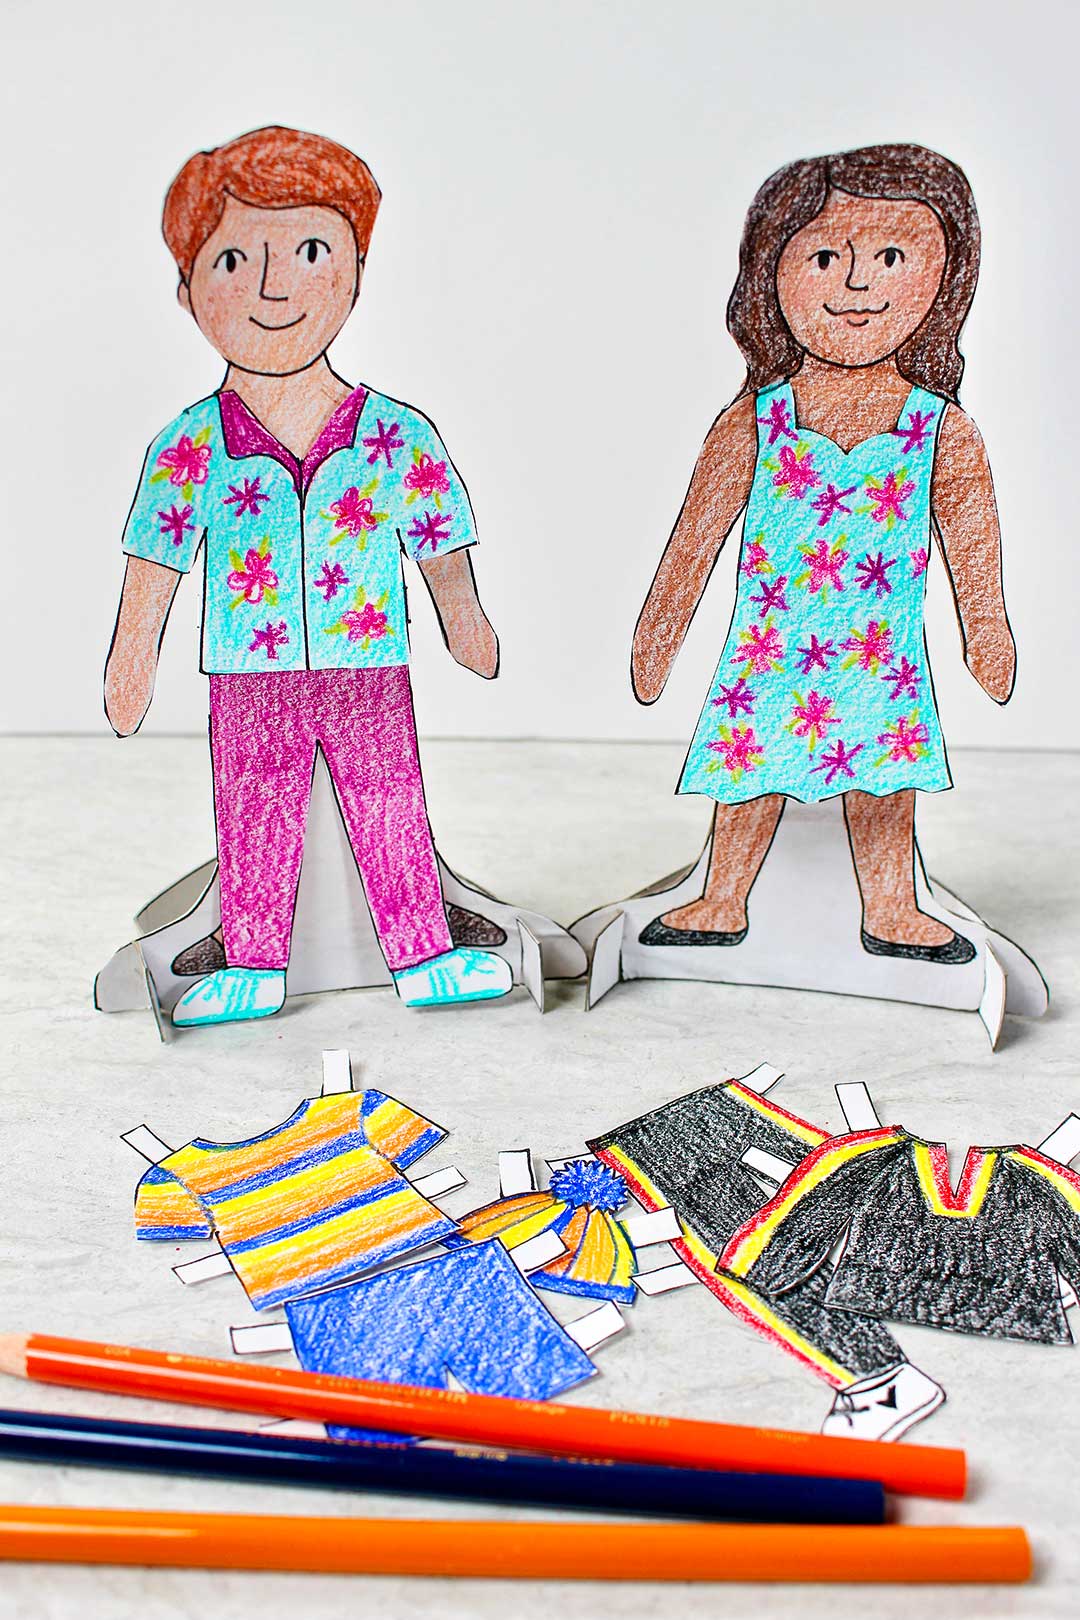 Princess Paper Dolls: Cut & Dress up| Fashion Activity Book| Paper dolls  for kids